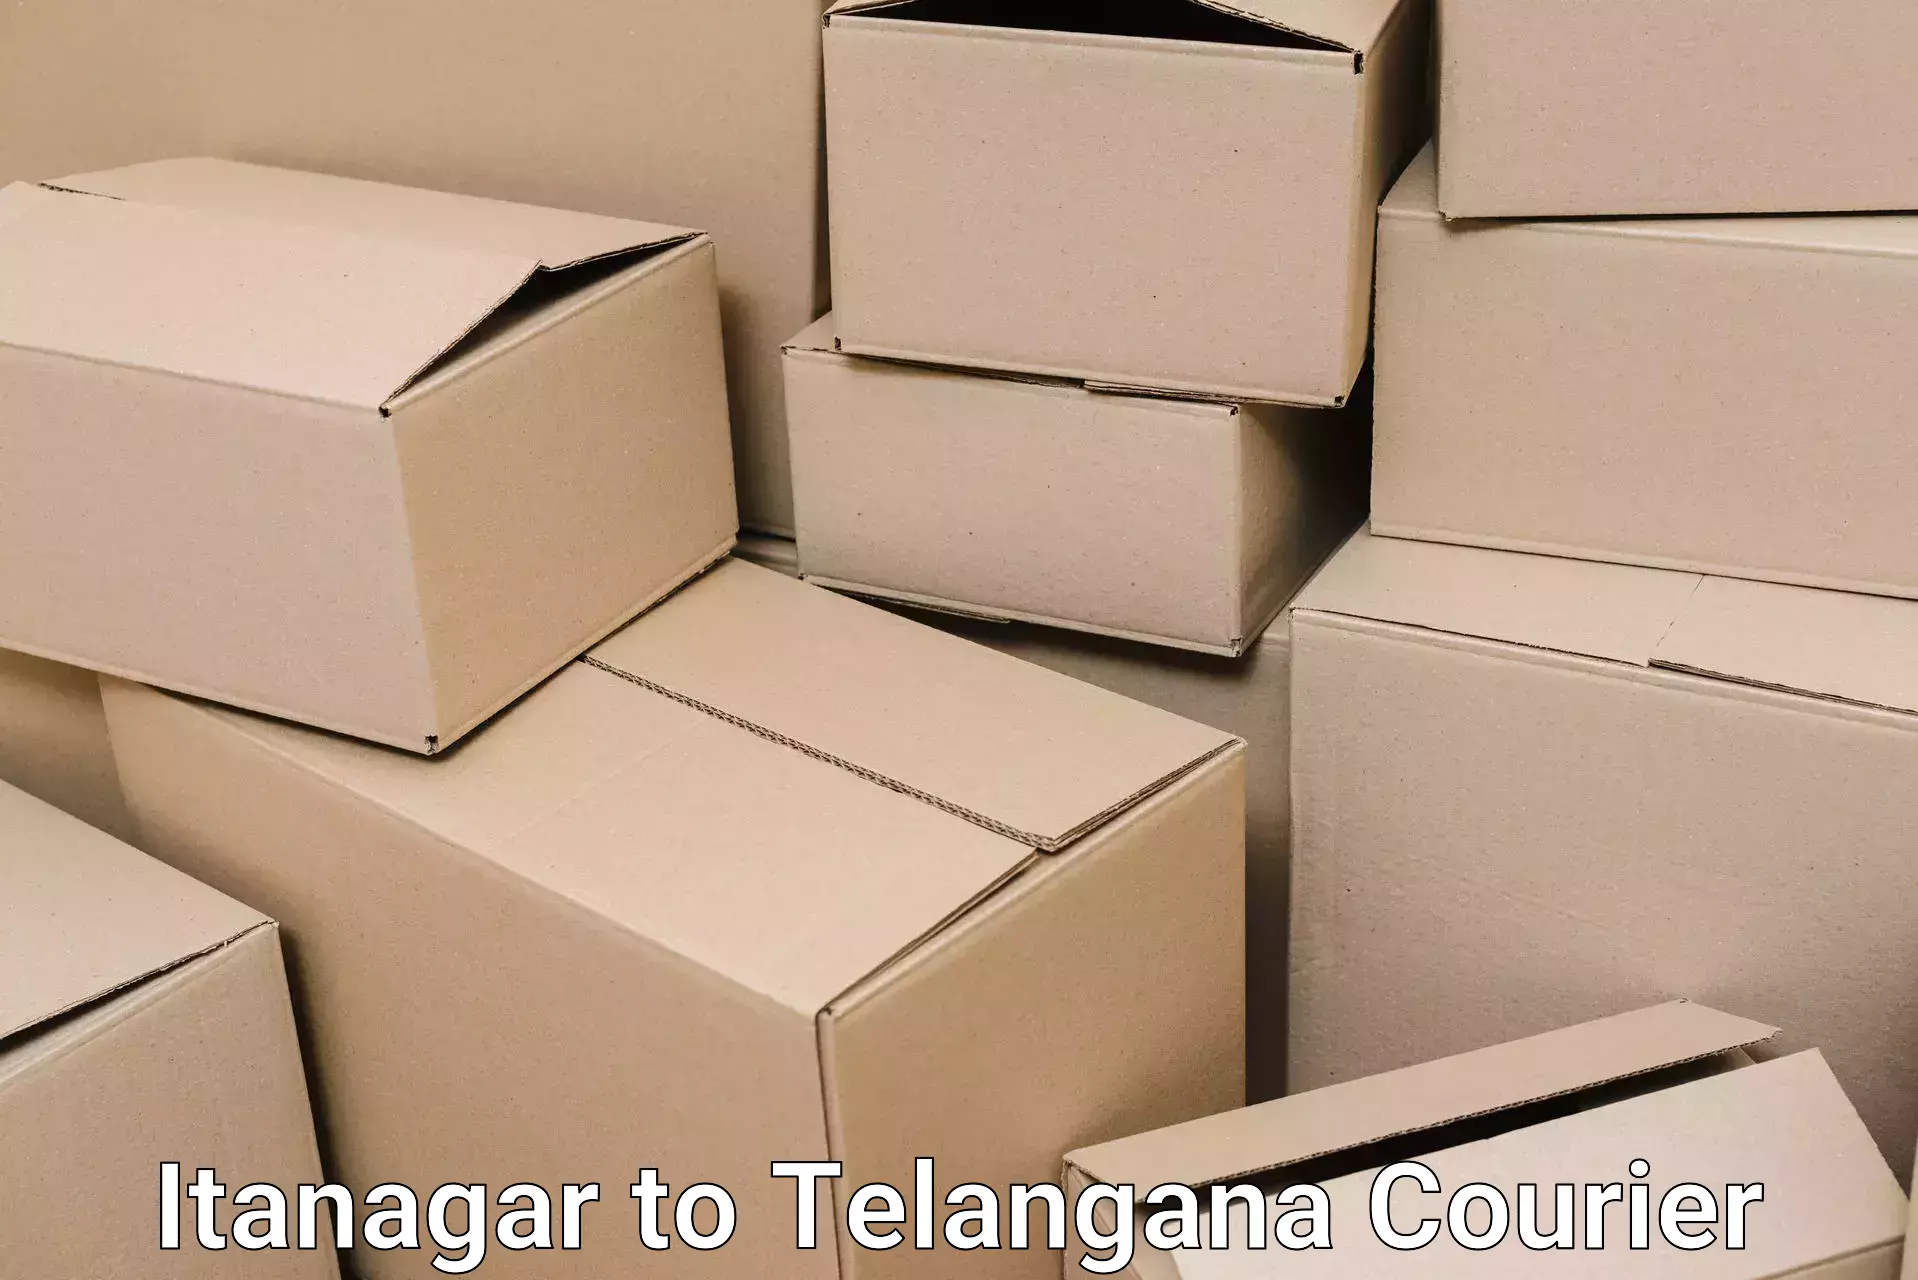 Trusted moving company in Itanagar to Ibrahimpatnam